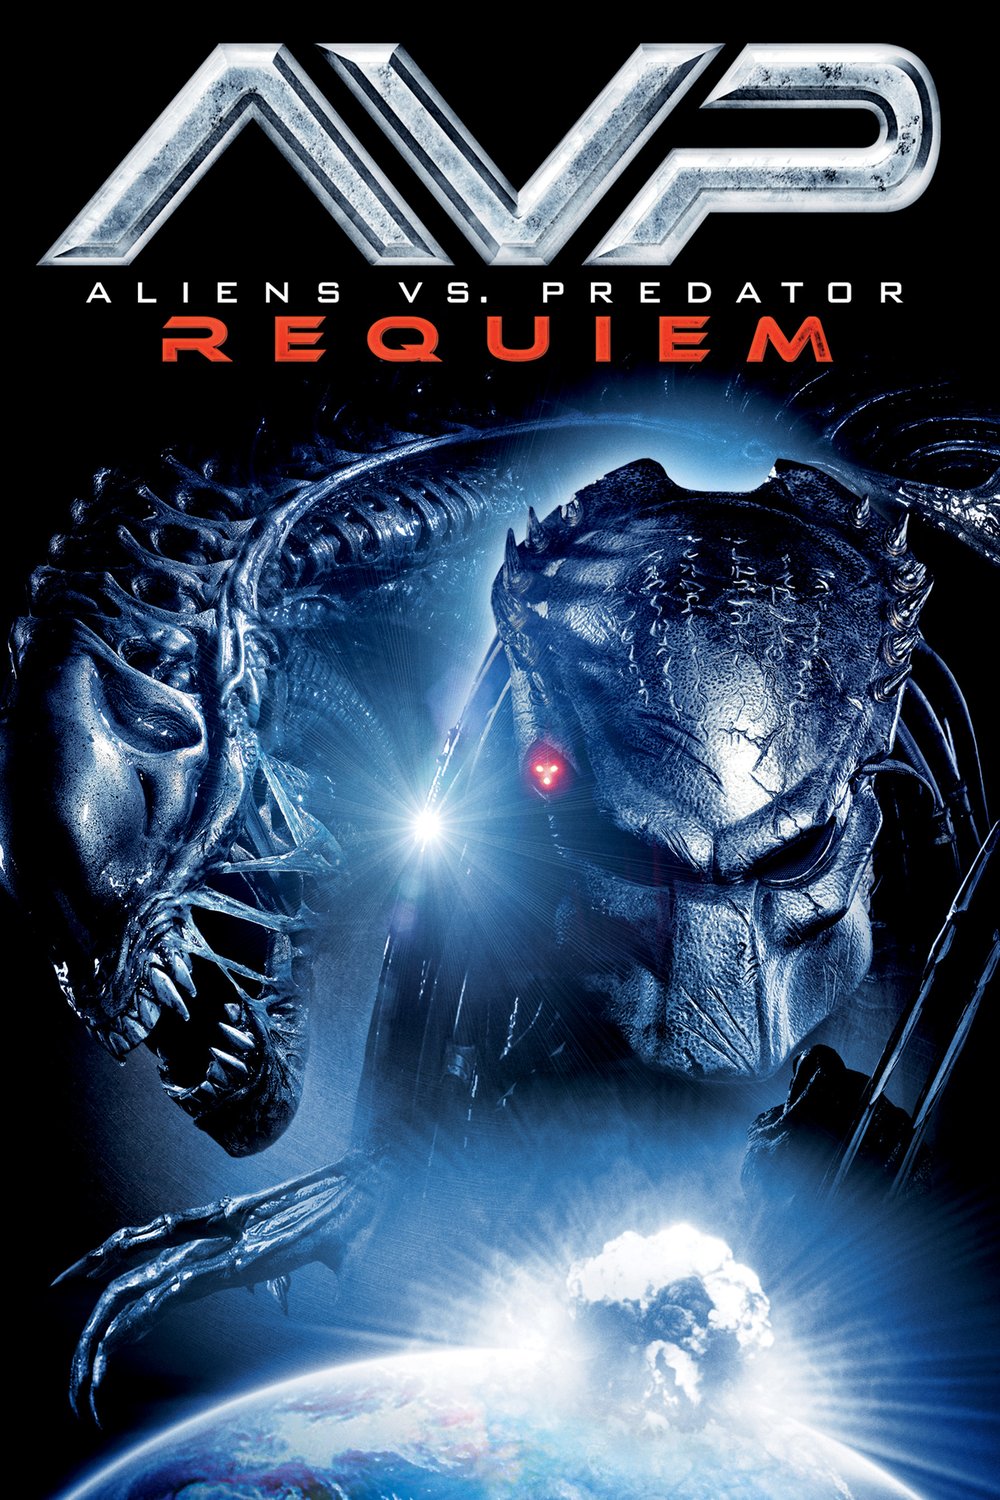 Poster of the movie Aliens vs. Predator: Requiem